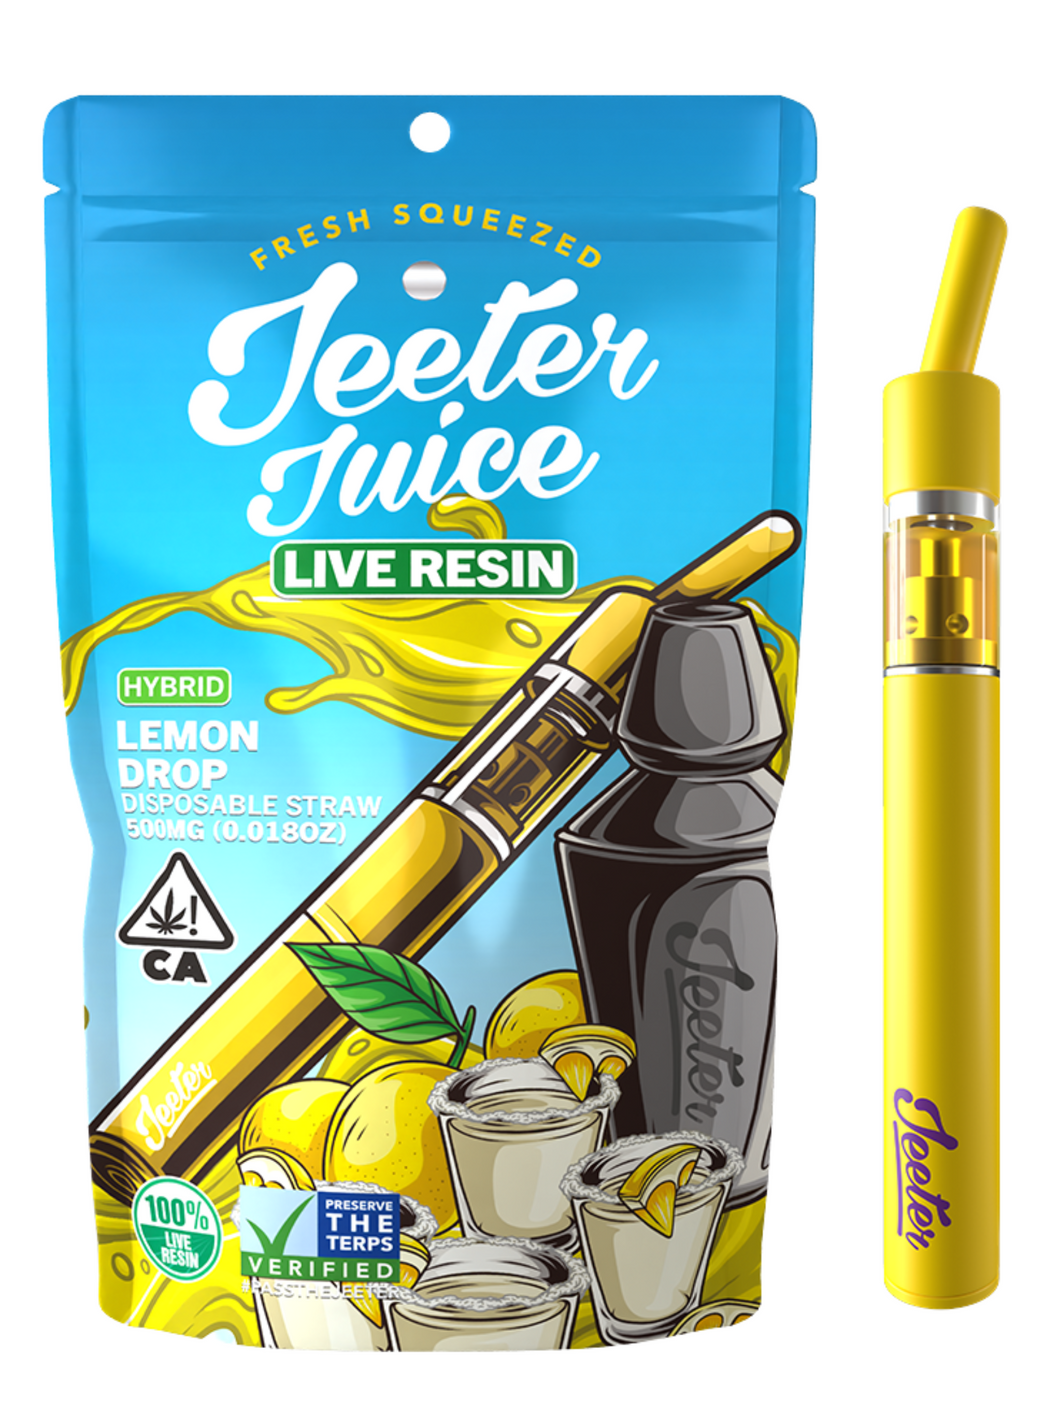 Jeeter Juice Live Resin Disposable Straw - Lemon Drop (I)